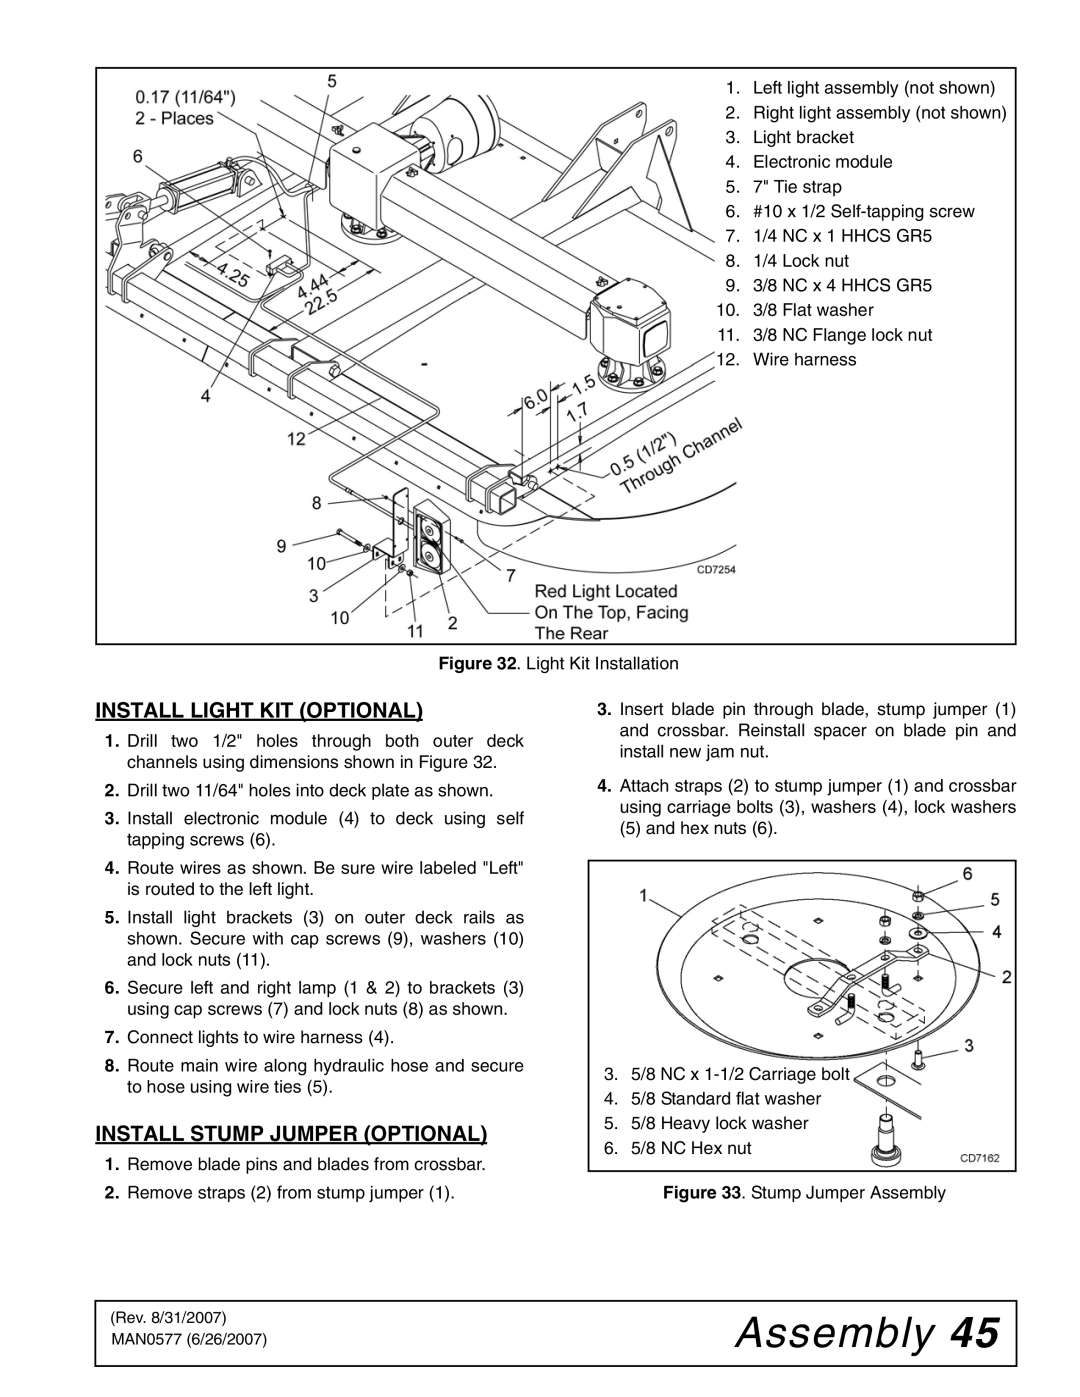 Woods Equipment TS1680Q manual Install Light KIT Optional, Install Stump Jumper Optional 